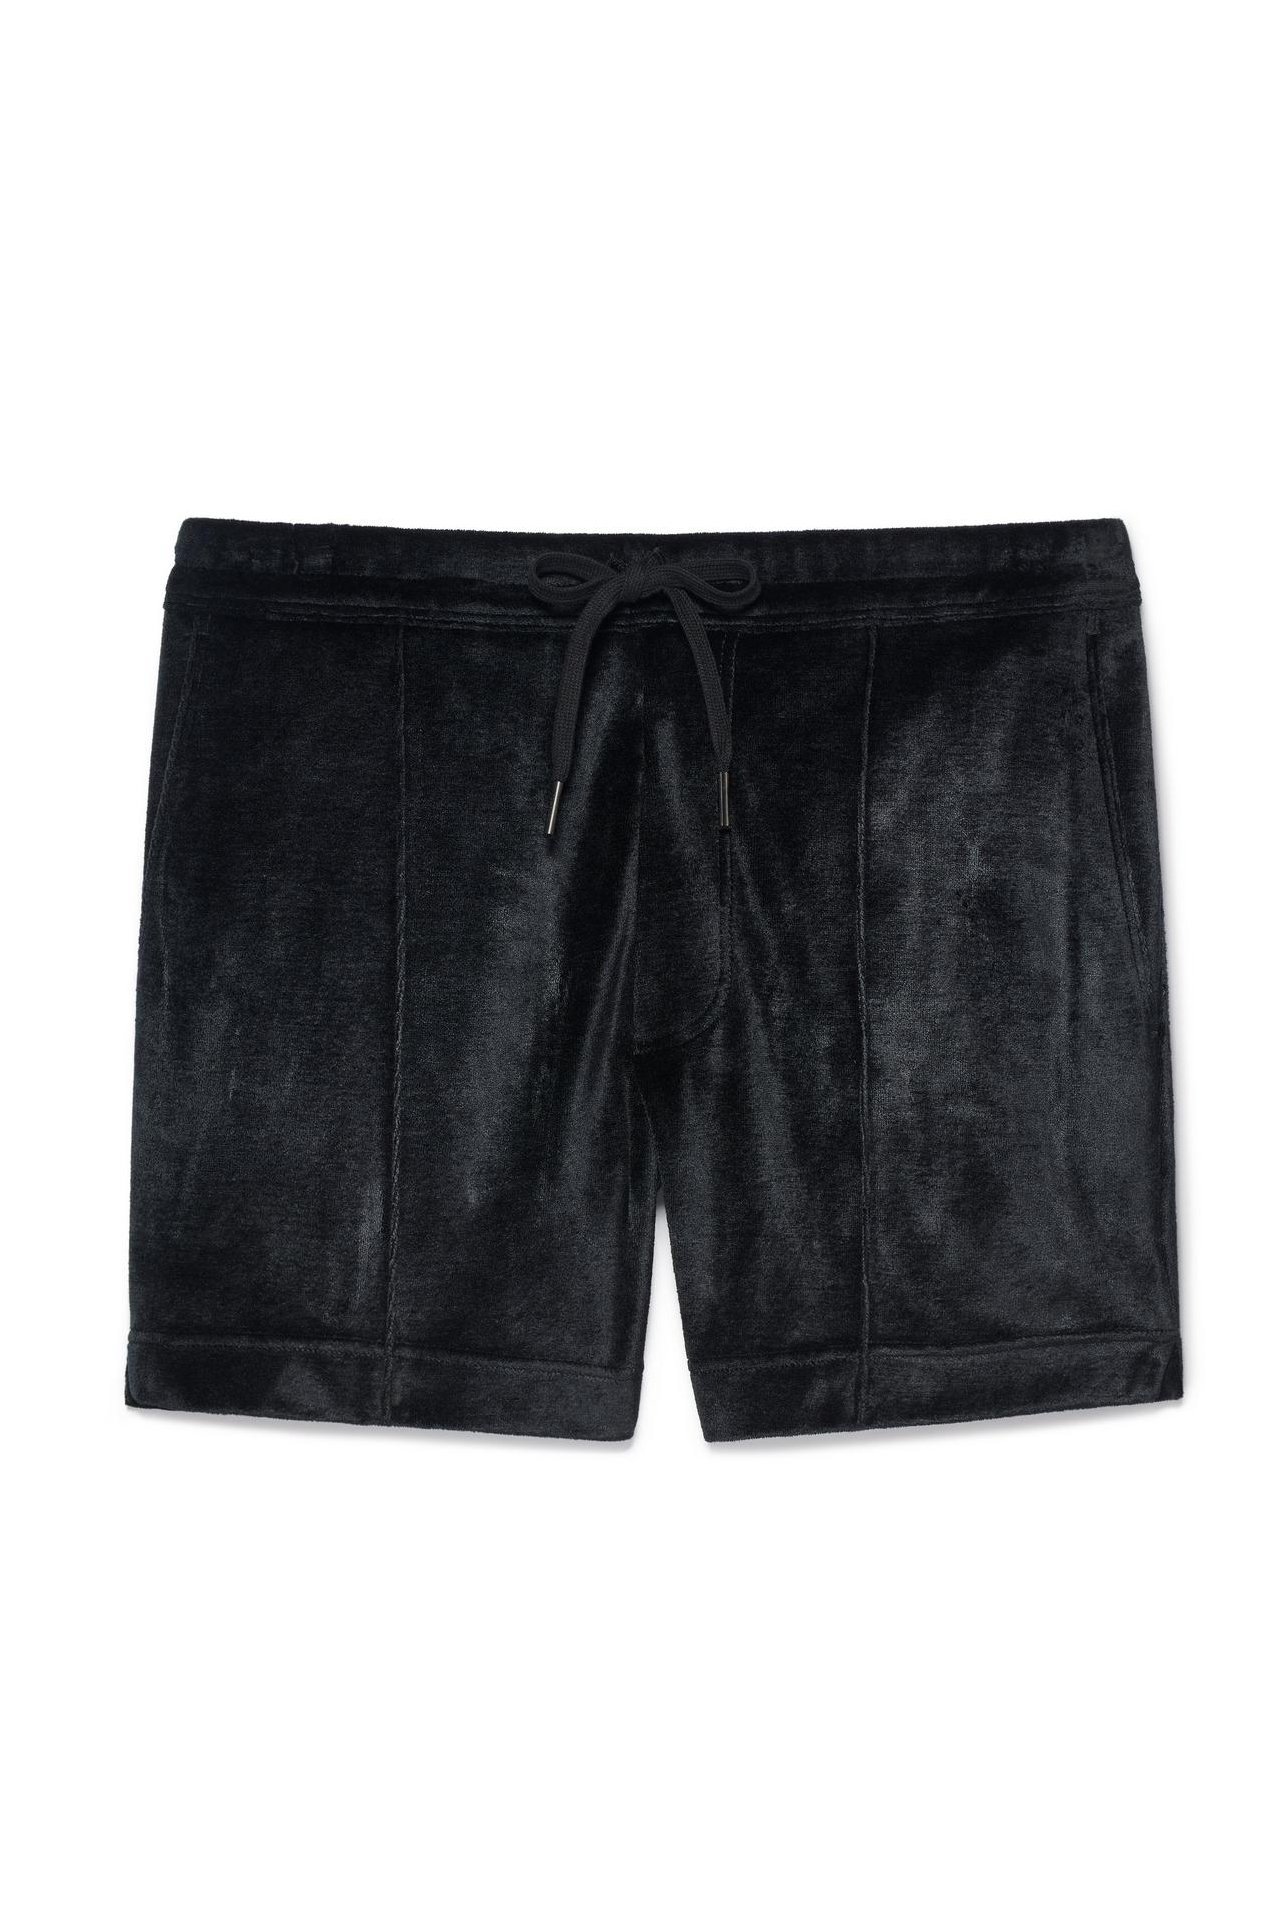 TOM FORD Fluid Modal Velour Shorts | Shorts | Jeans & Pants | Clothing | Men  | mientus Online Store